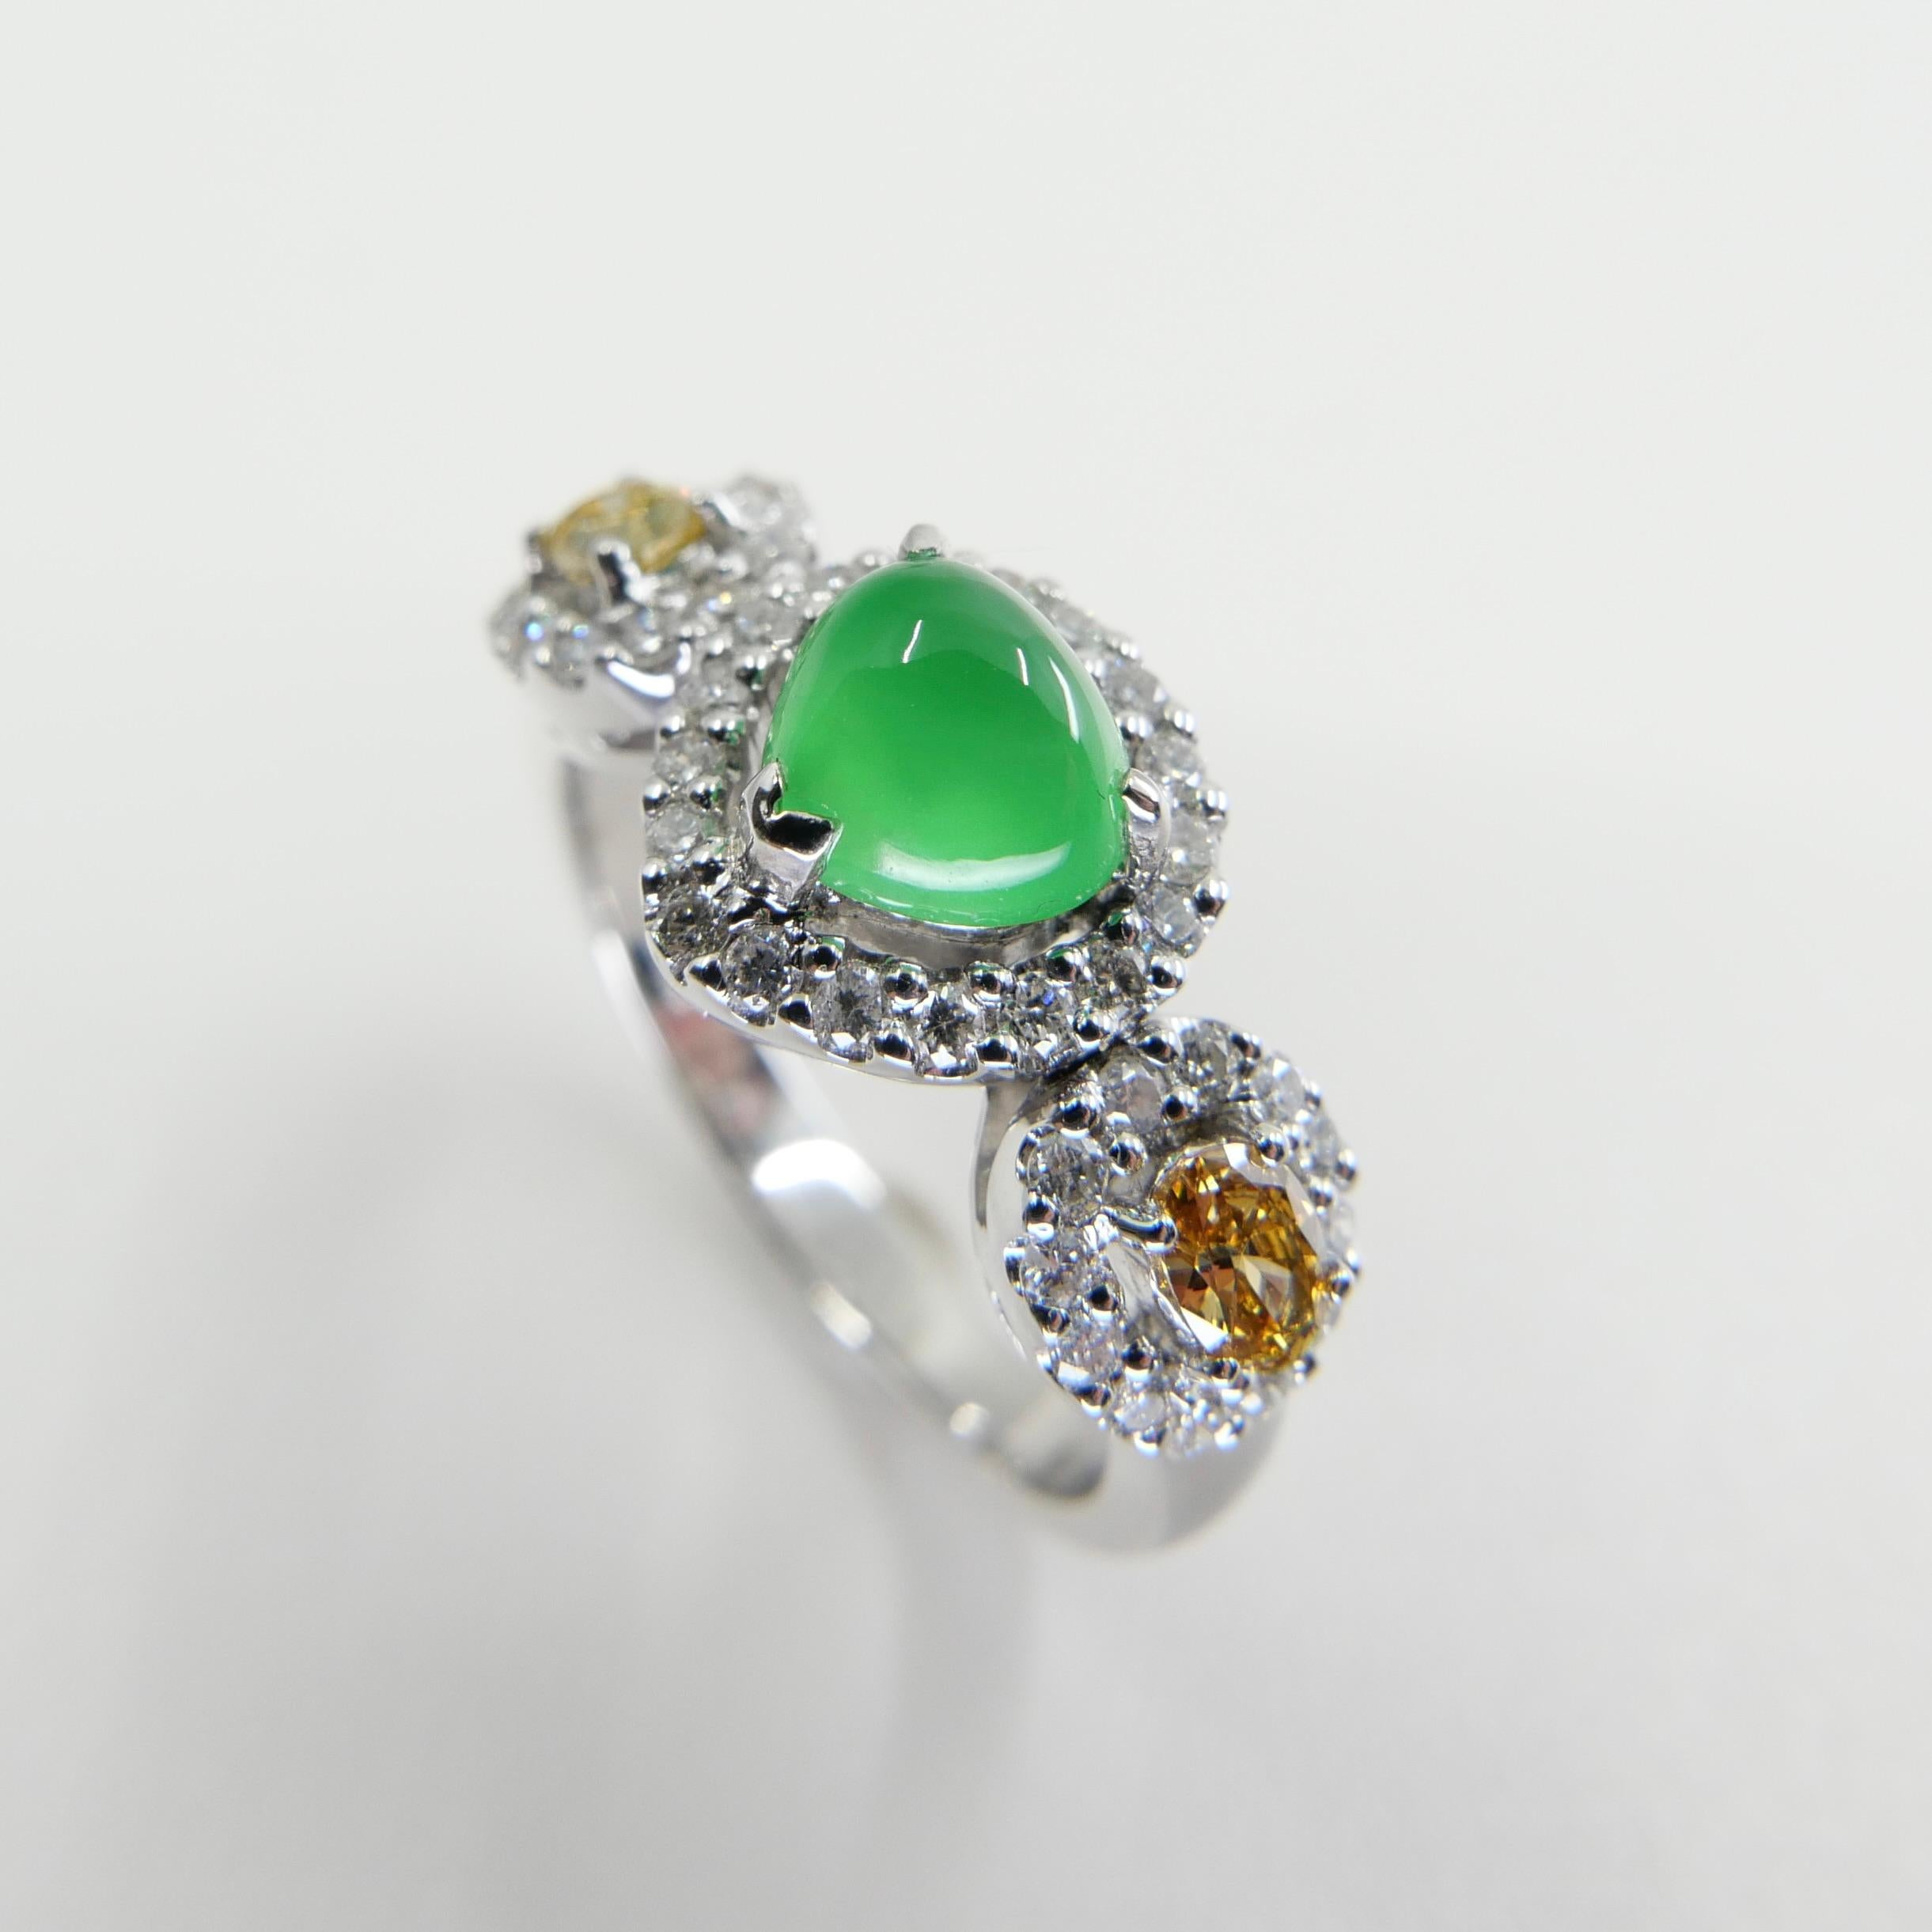 Certified Jade & Fancy Yellow Diamond Cocktail Ring, Glowing Apple Green Jade For Sale 1